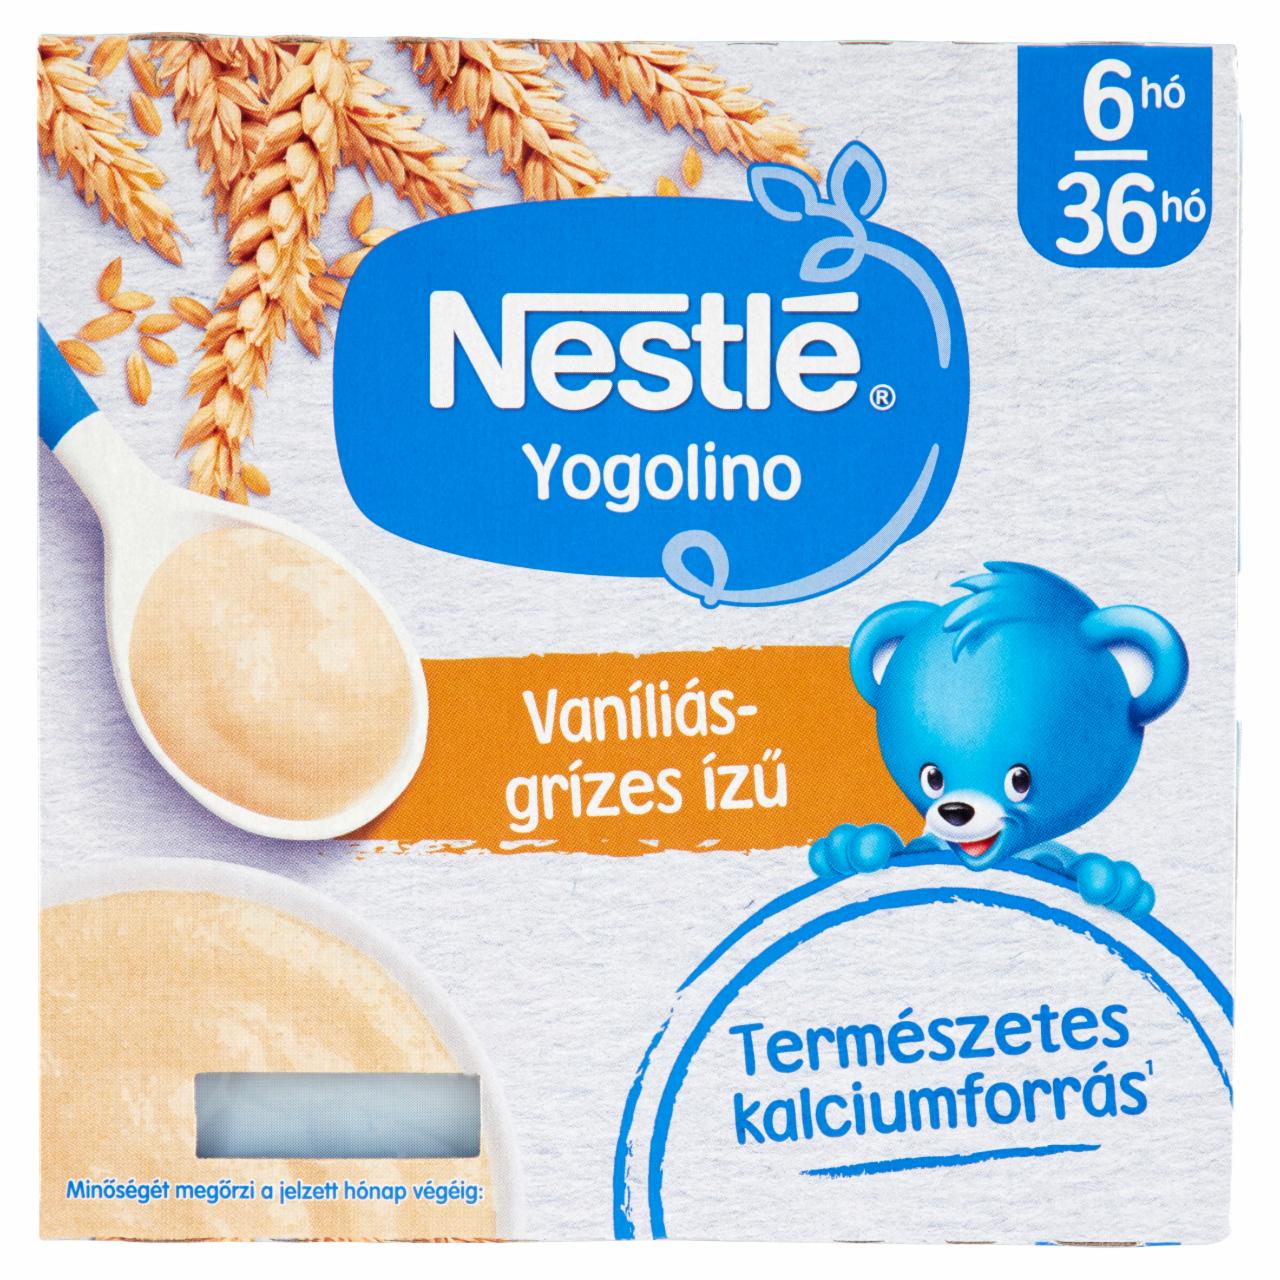 Képek - Nestlé Yogolino vaníliás-grízes ízű babapuding 6 hónapos kortól 36 hónapos korig 4 x 100 g (400 g)